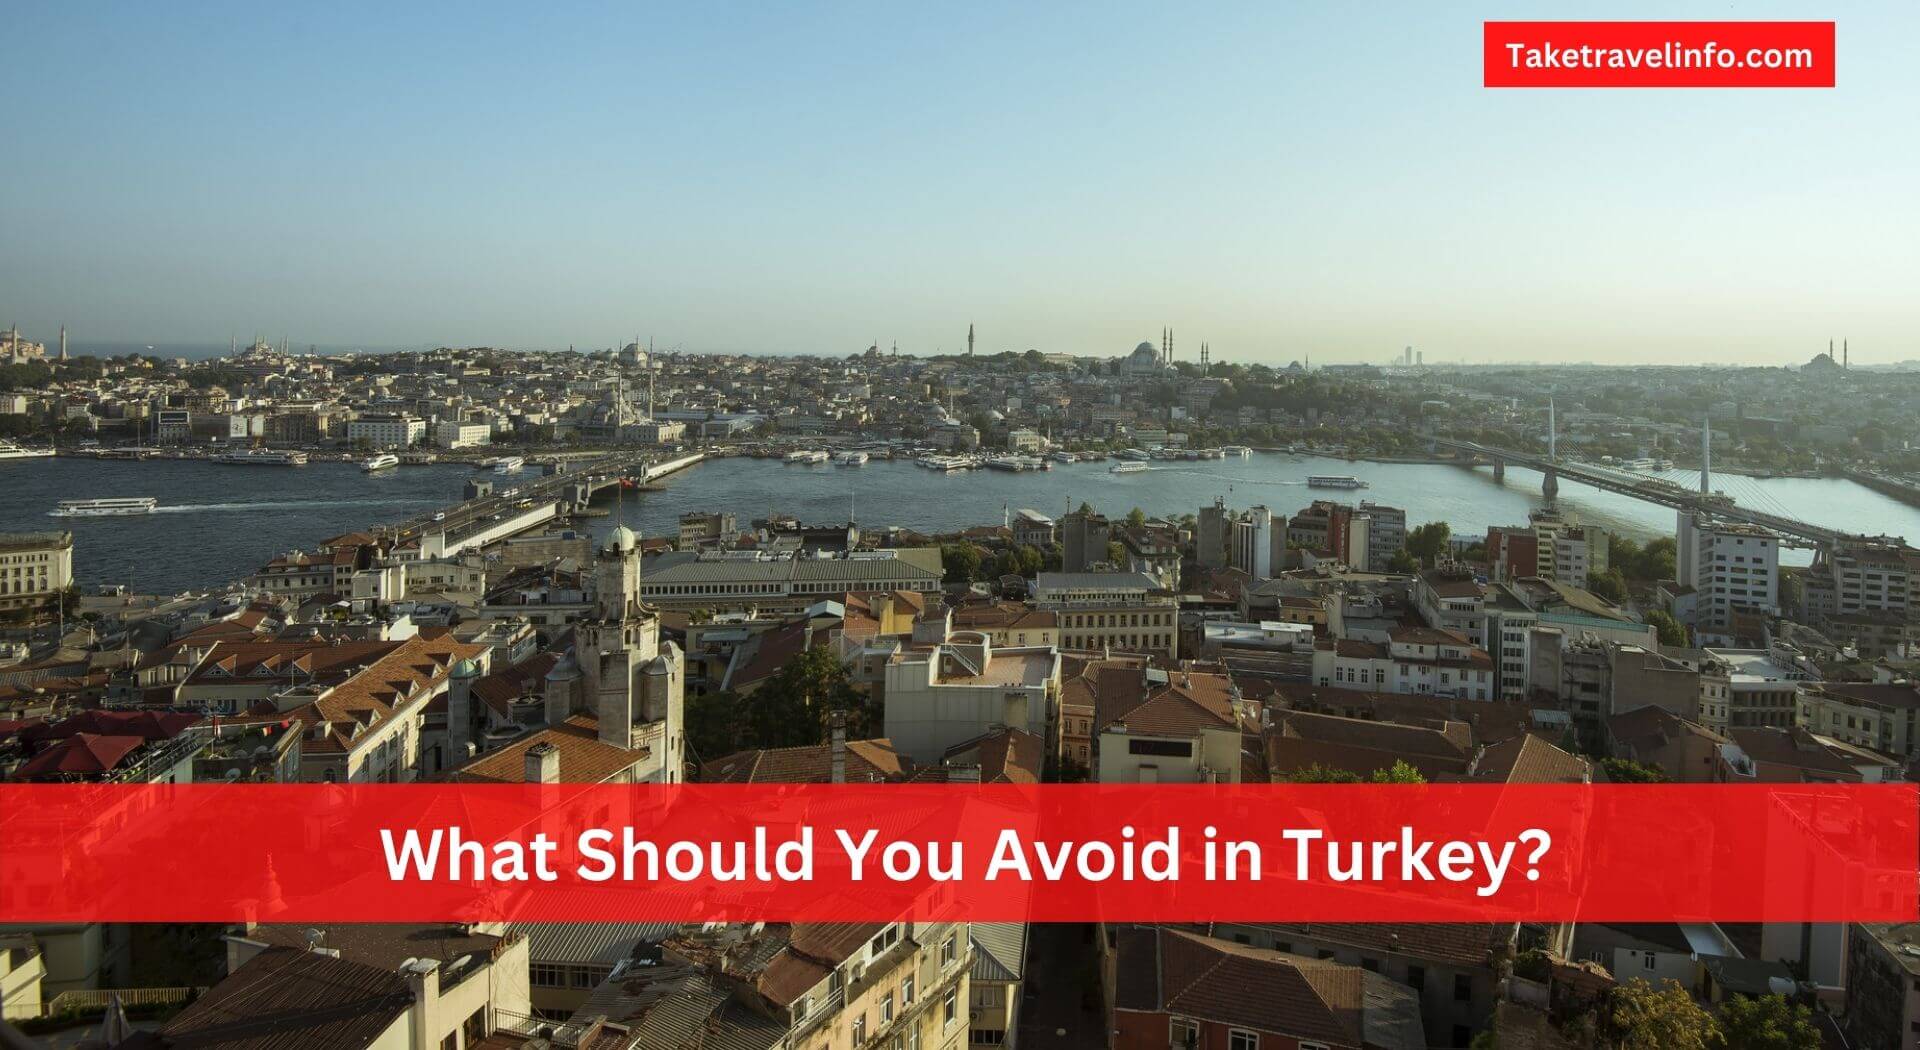 Is Turkey Safe to Travel